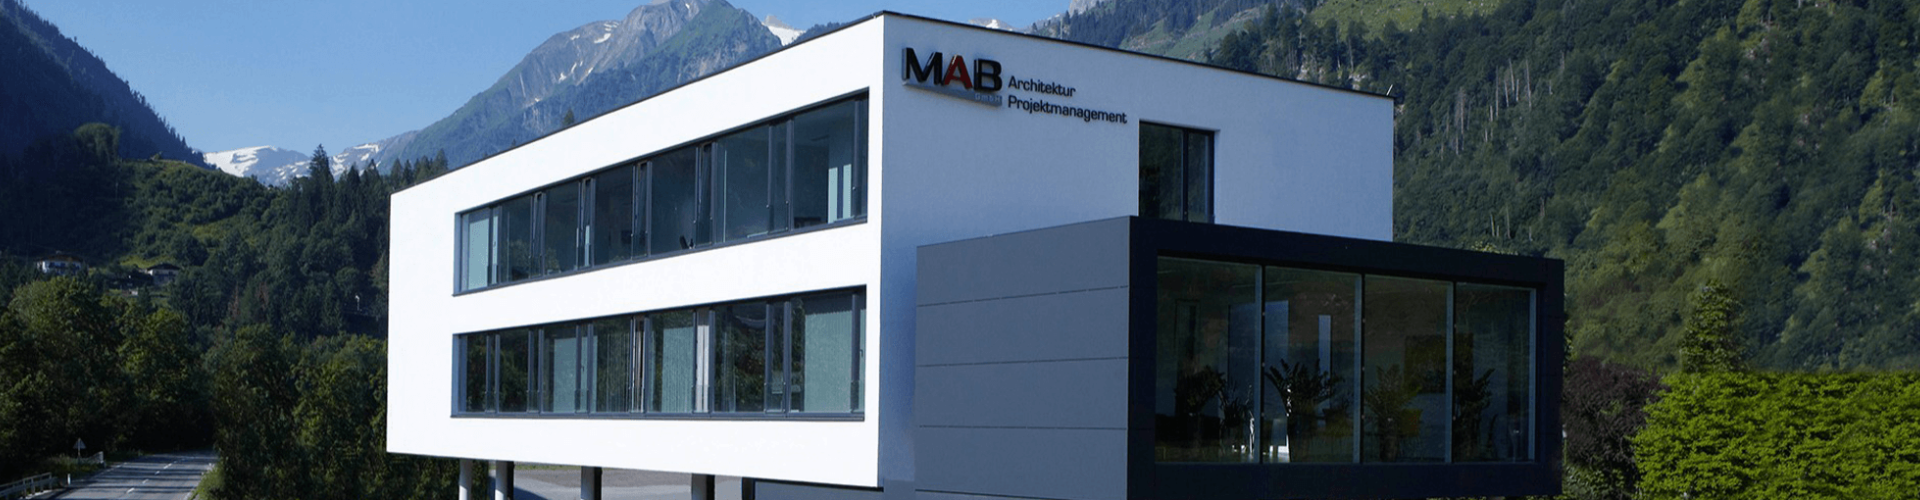 MAB Architektur Projektmanagent GmbH cover